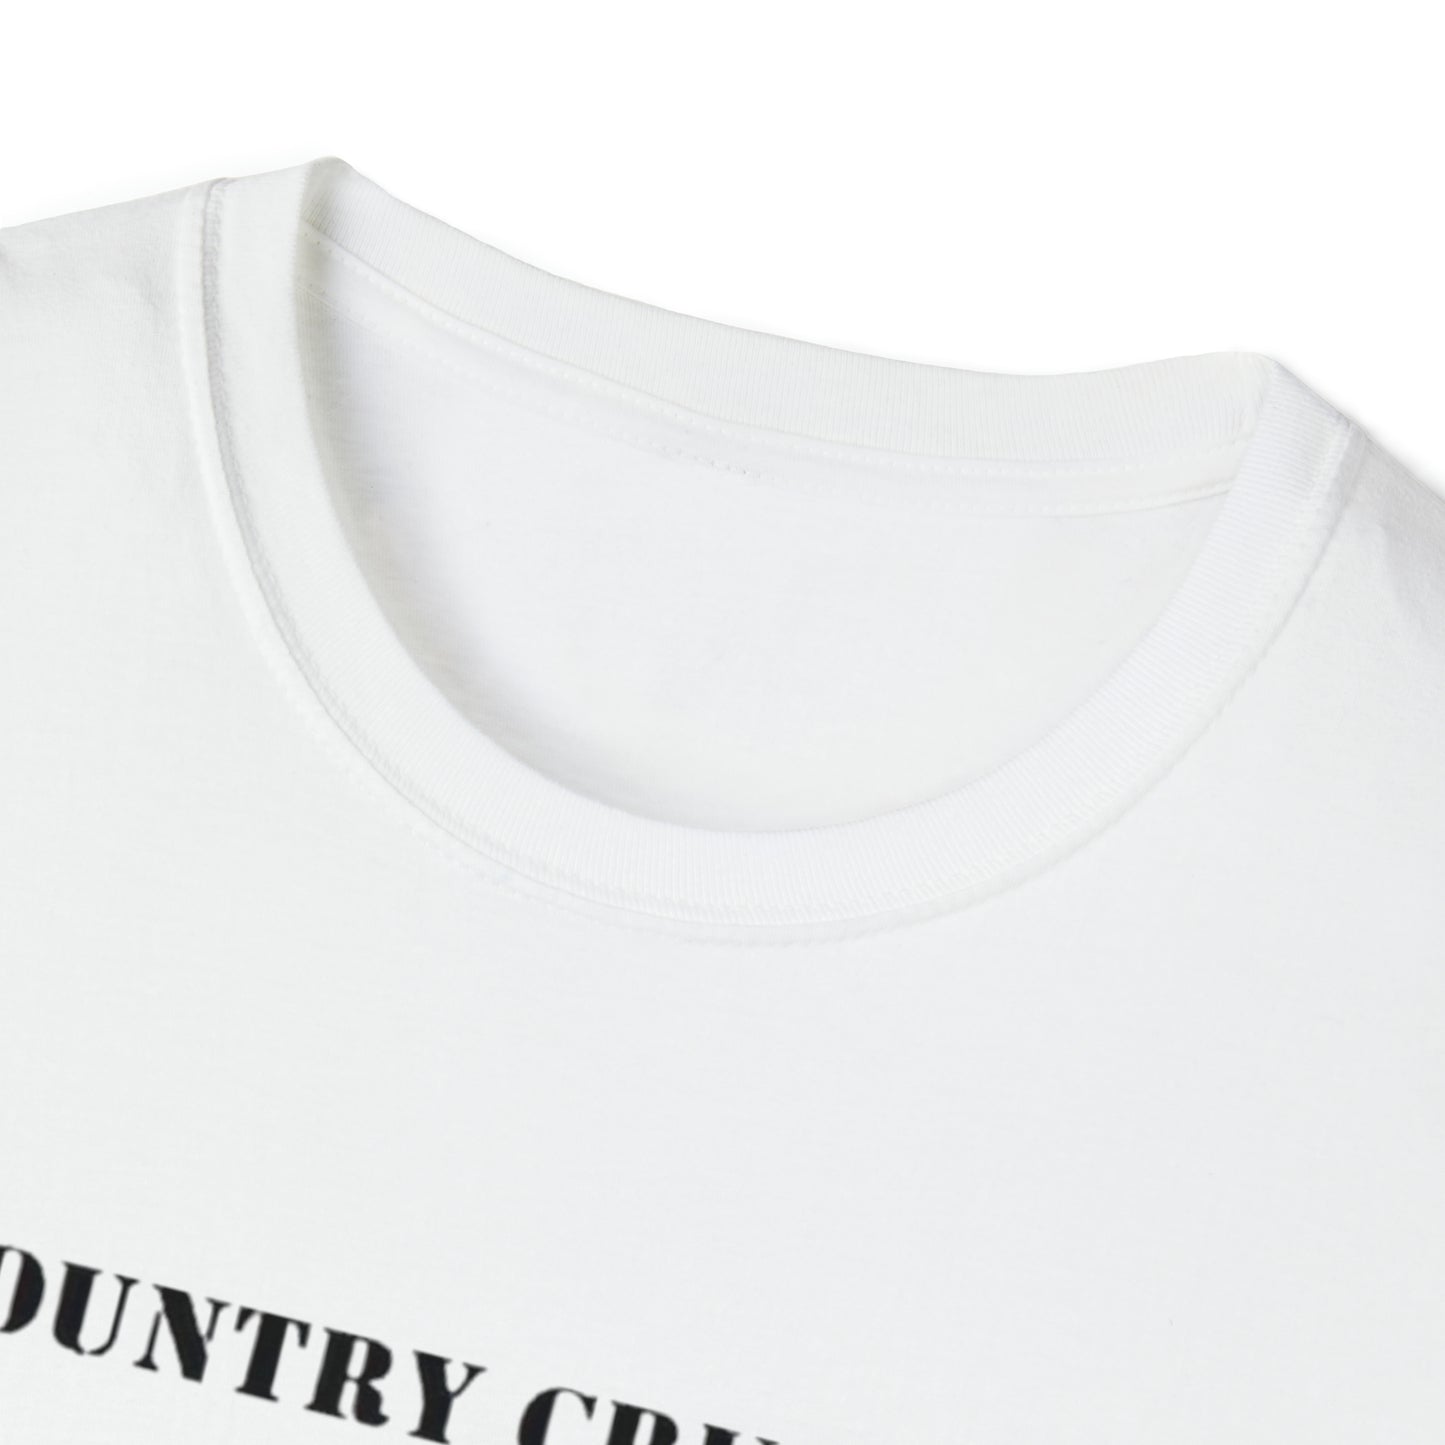 Country Cruzerz - No Background Unisex Softstyle T-Shirt